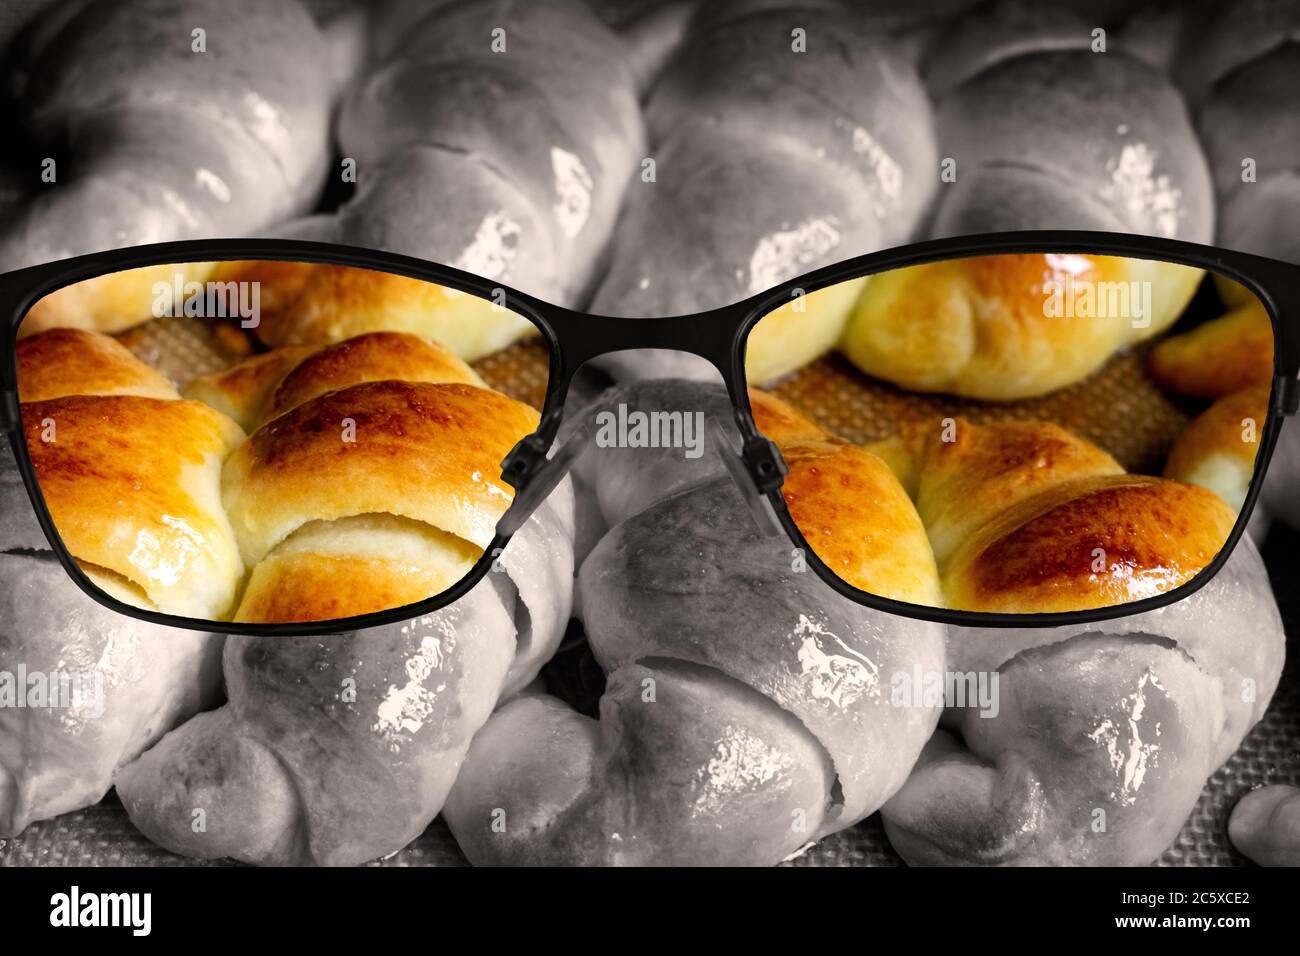 View of croissants through lens, medialunas de Manteca in selective colors. Stock Photo